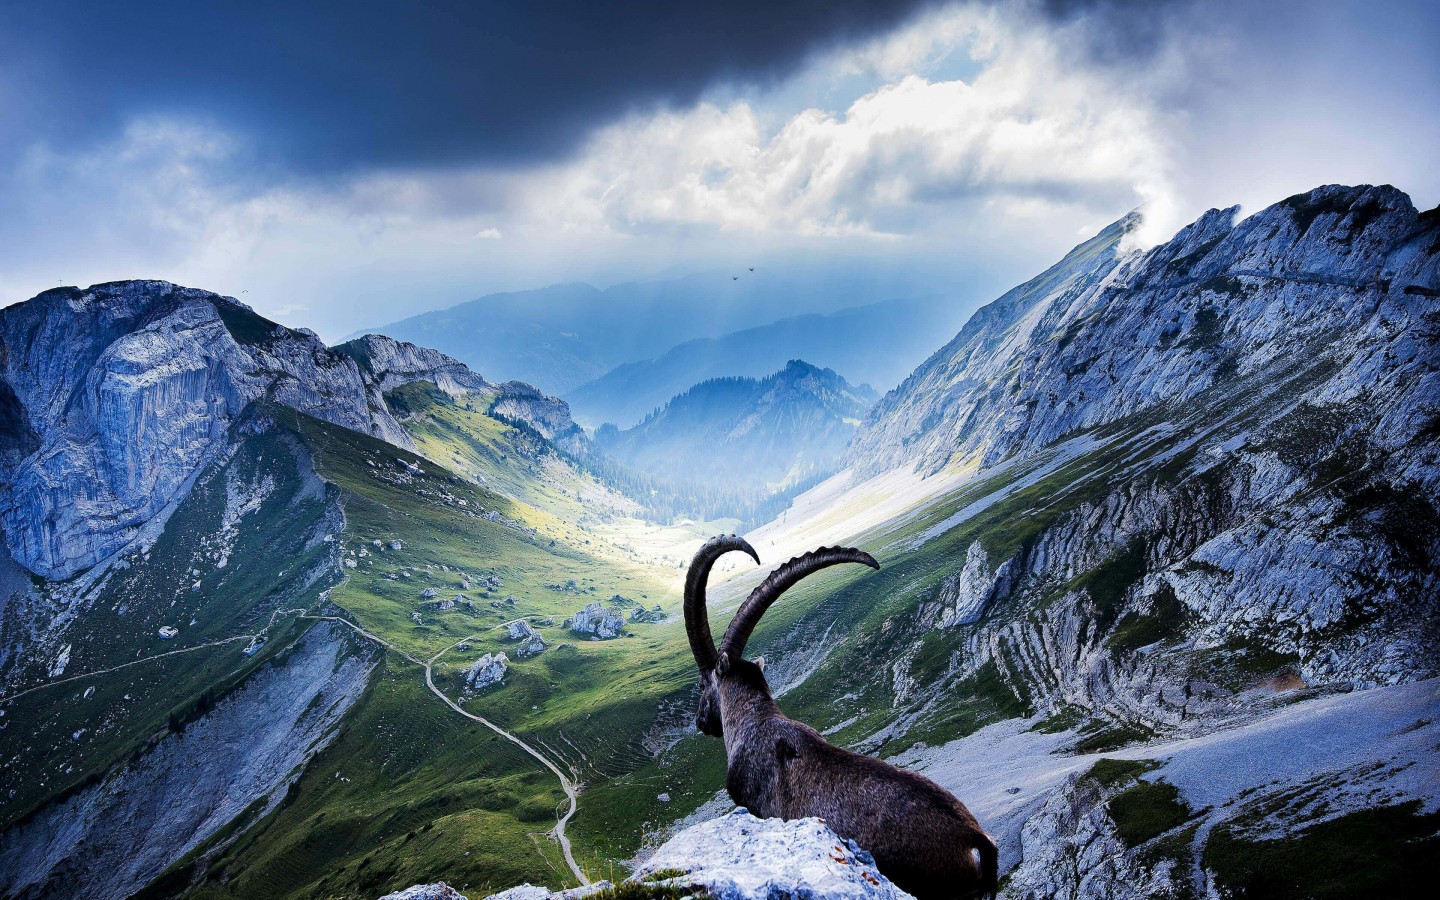 Goat at Pilatus, Switzerland Wallpaper for Desktop 1440x900